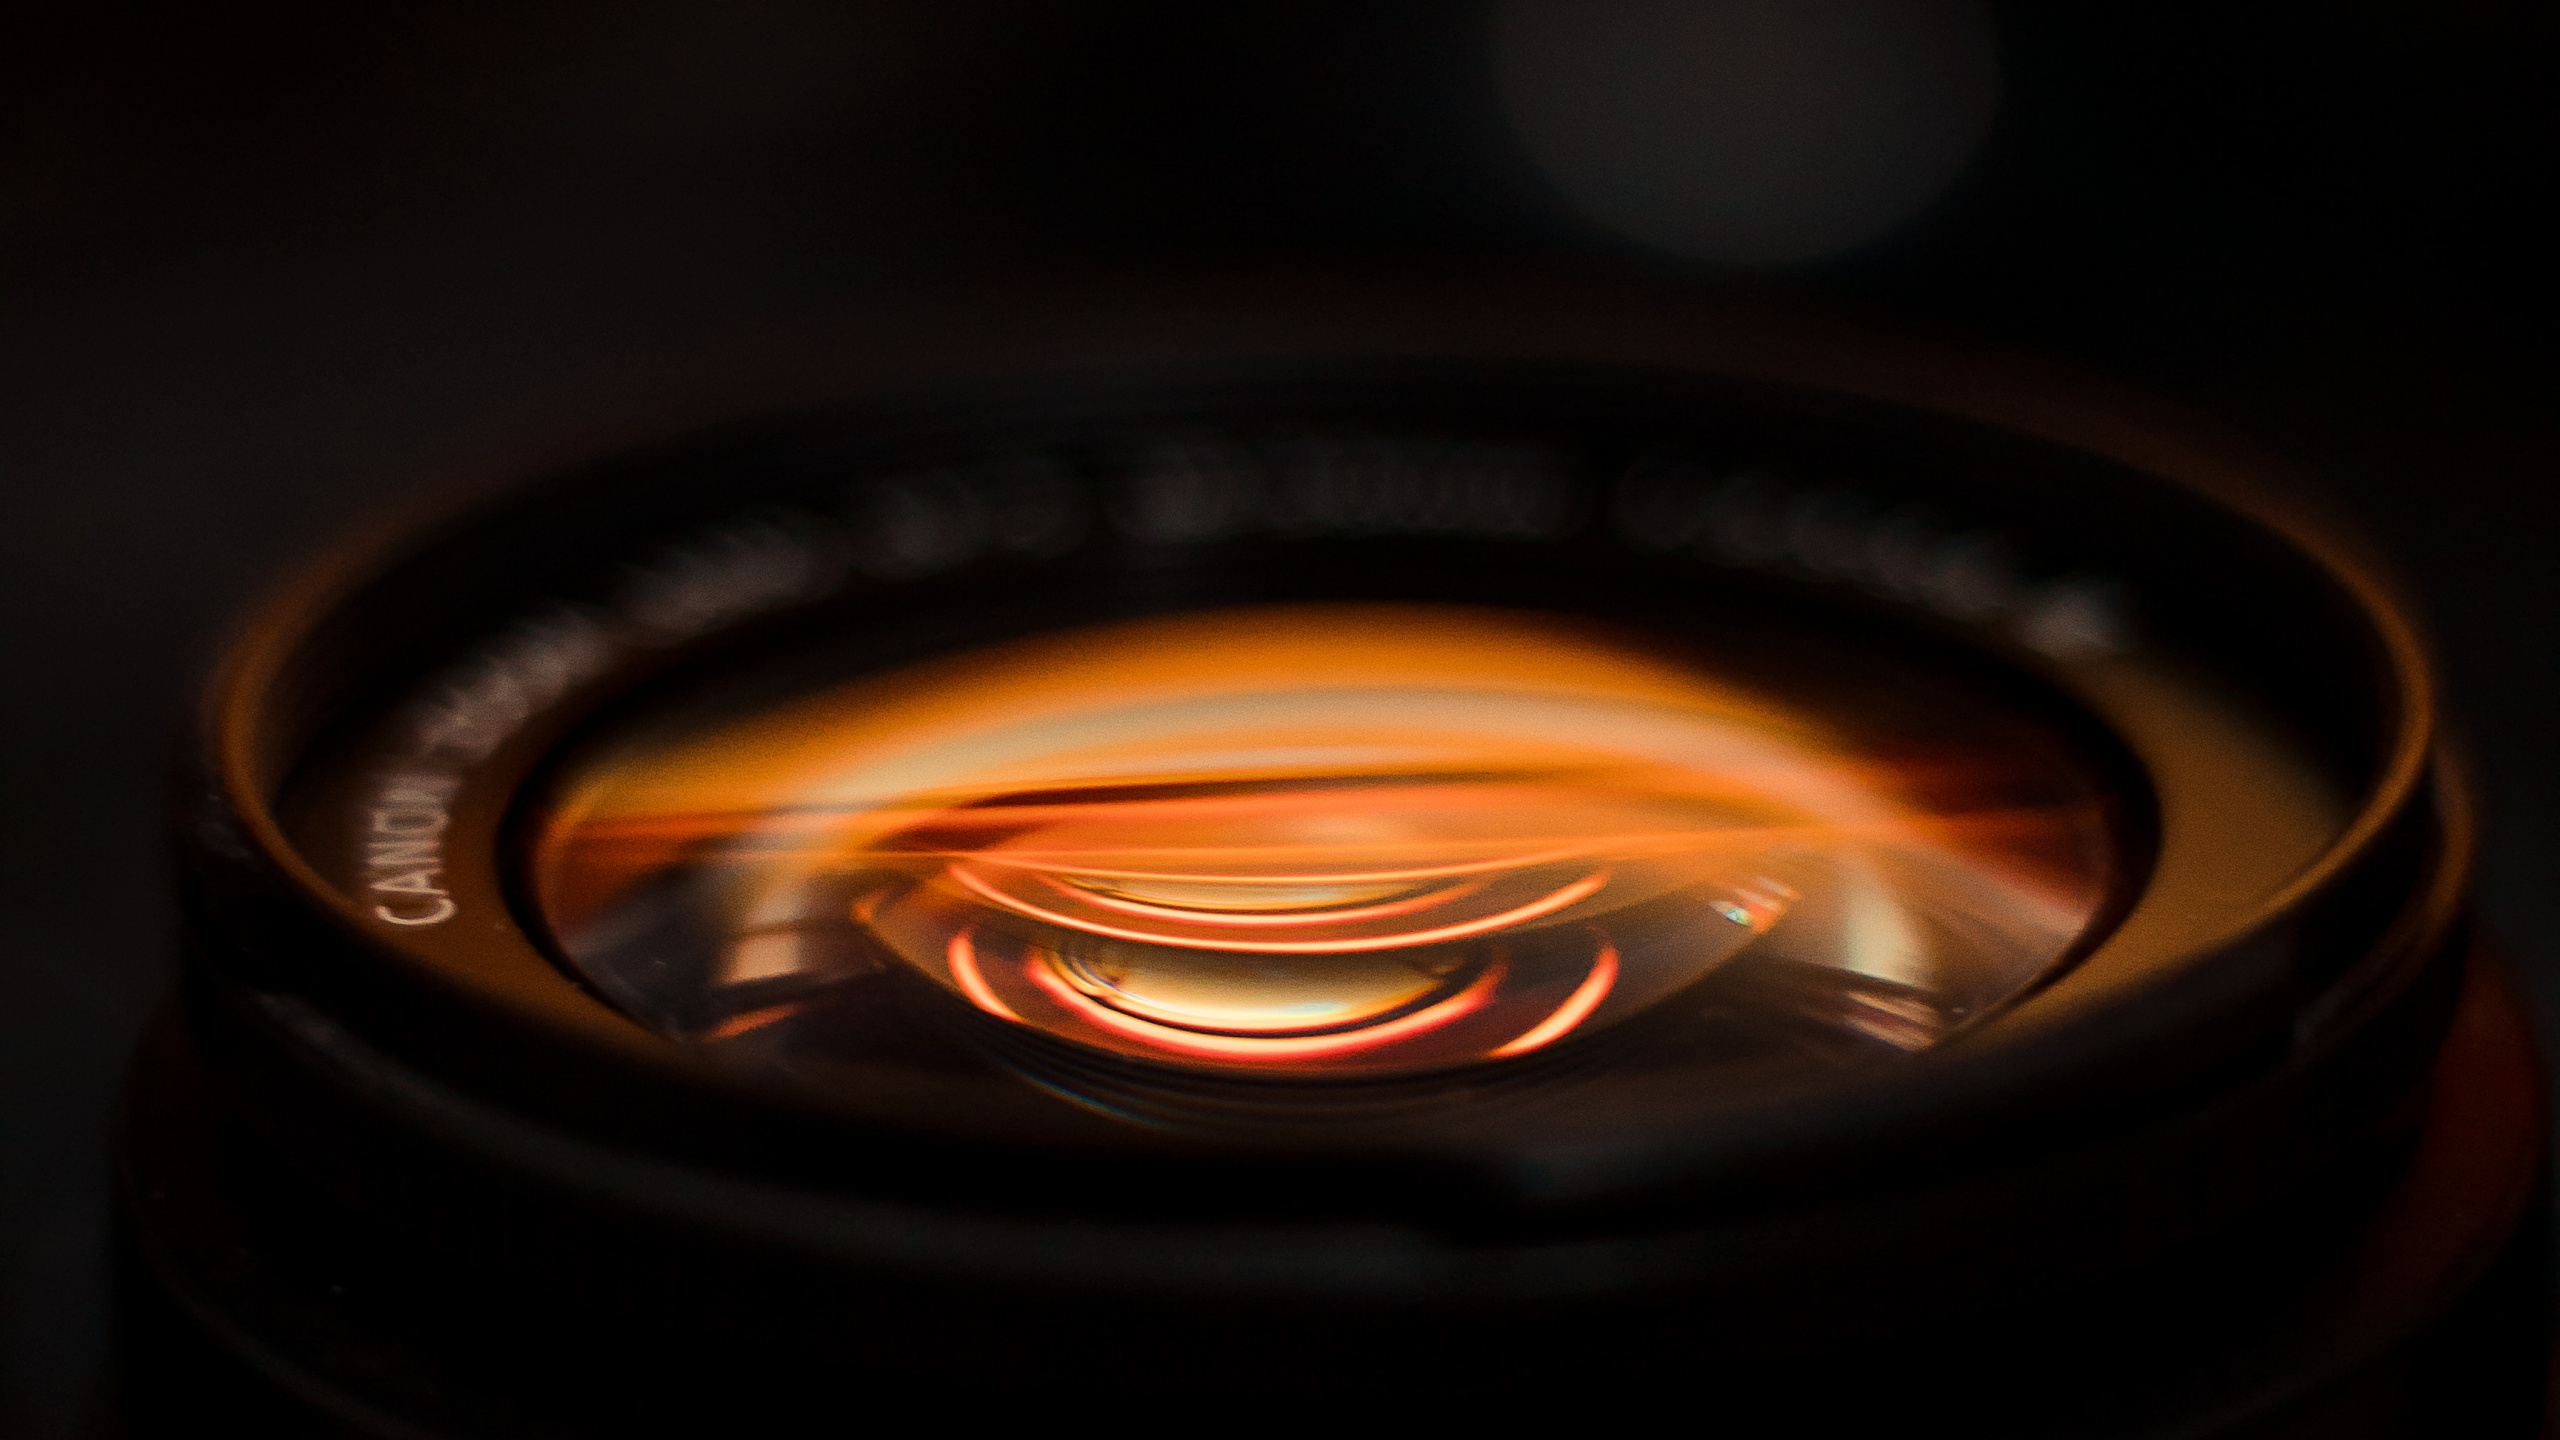 Black Camera Lens With Orange Light. Wallpaper in 2560x1440 Resolution